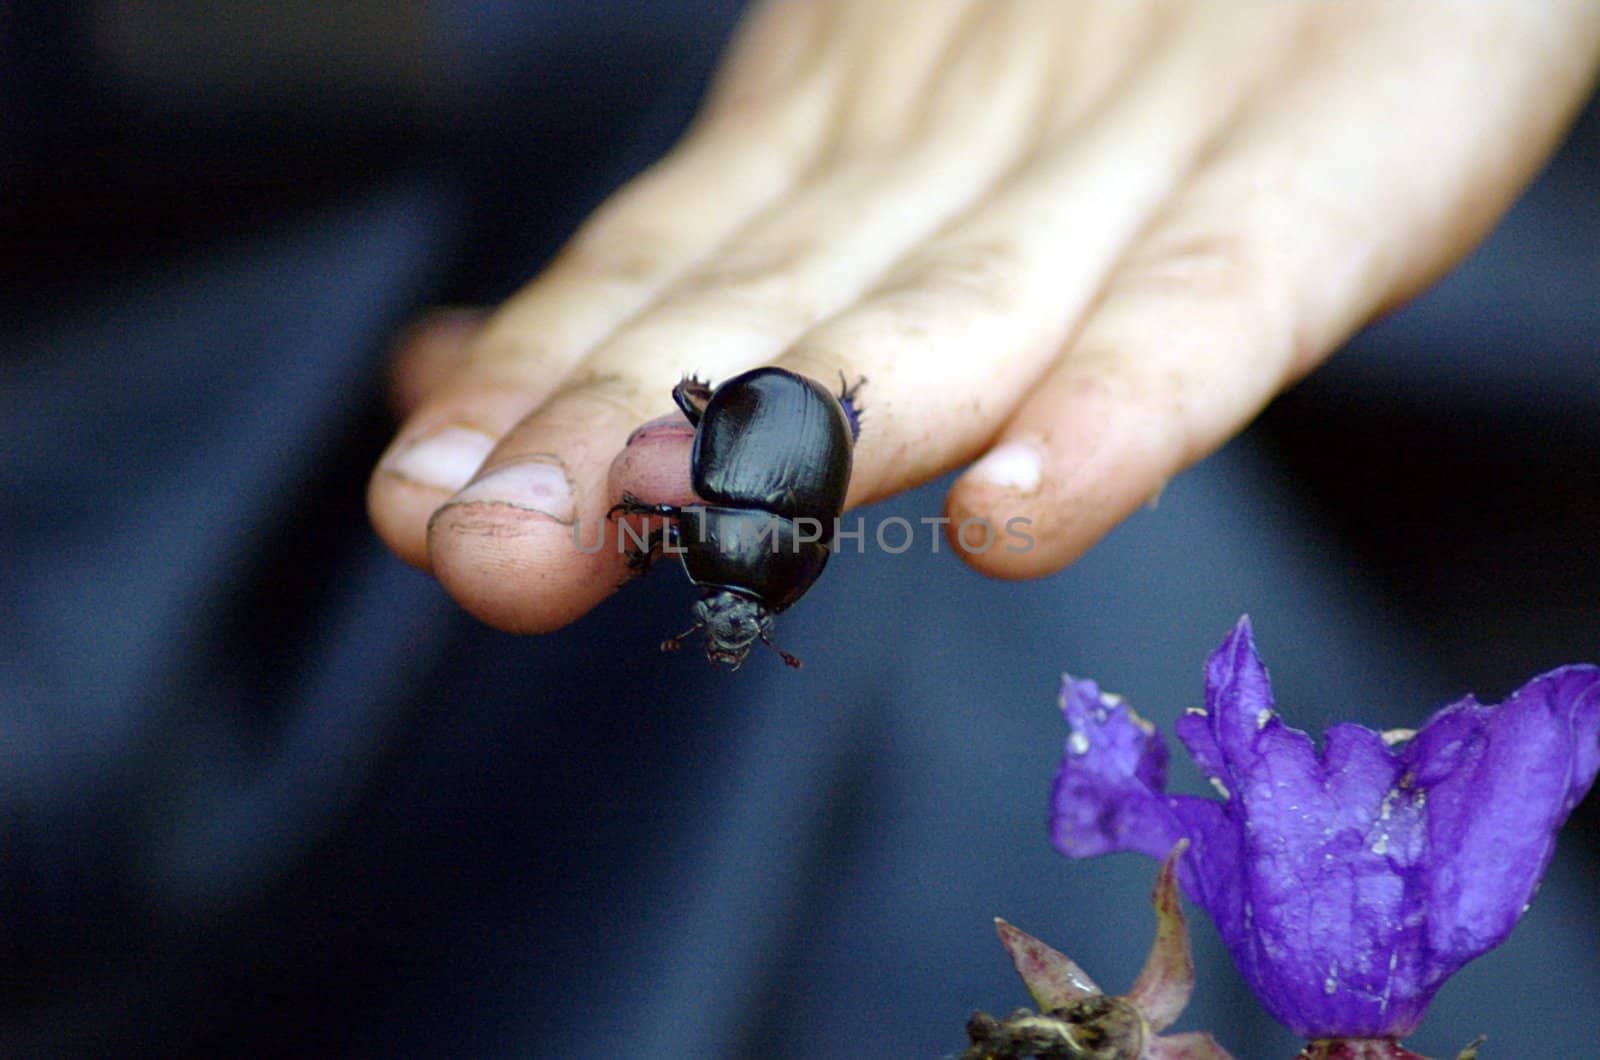 Beetle on the boy by sundaune